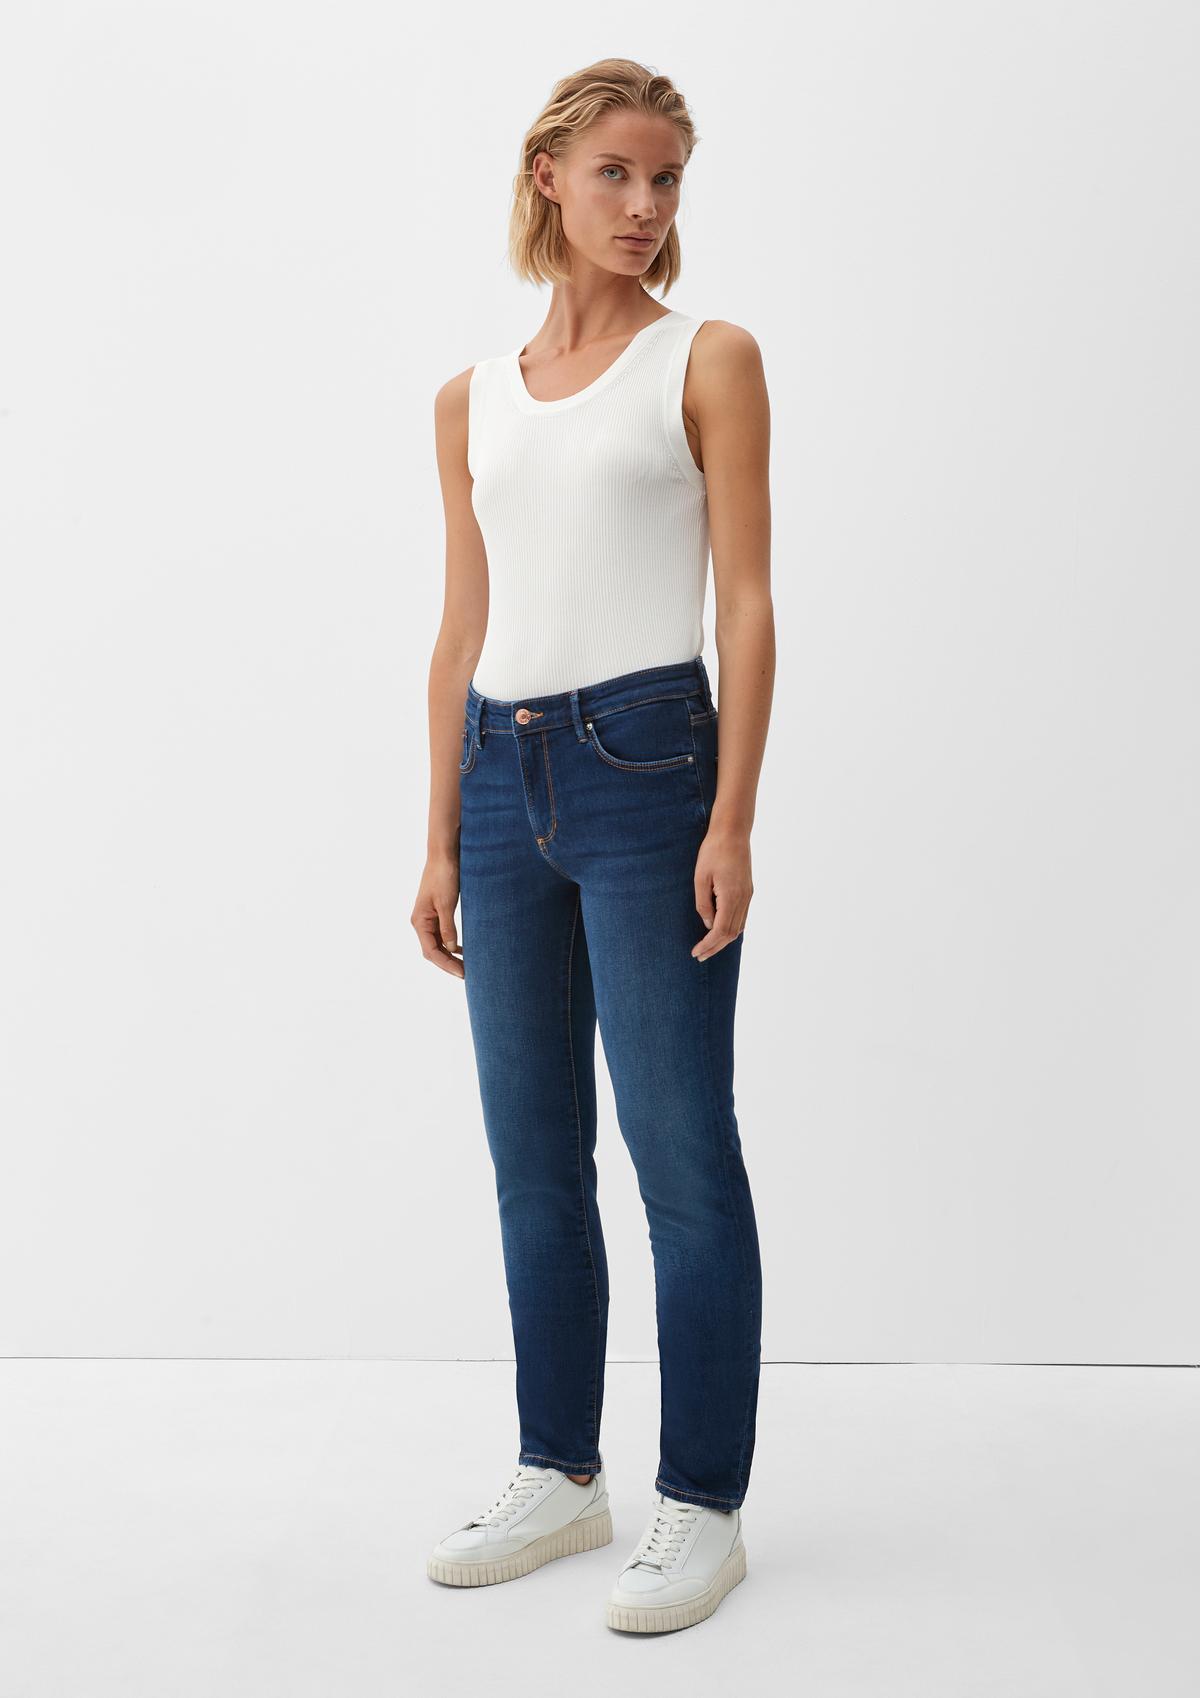 Jeans Betsy / Slim Fit / Mid Rise / Slim Leg 